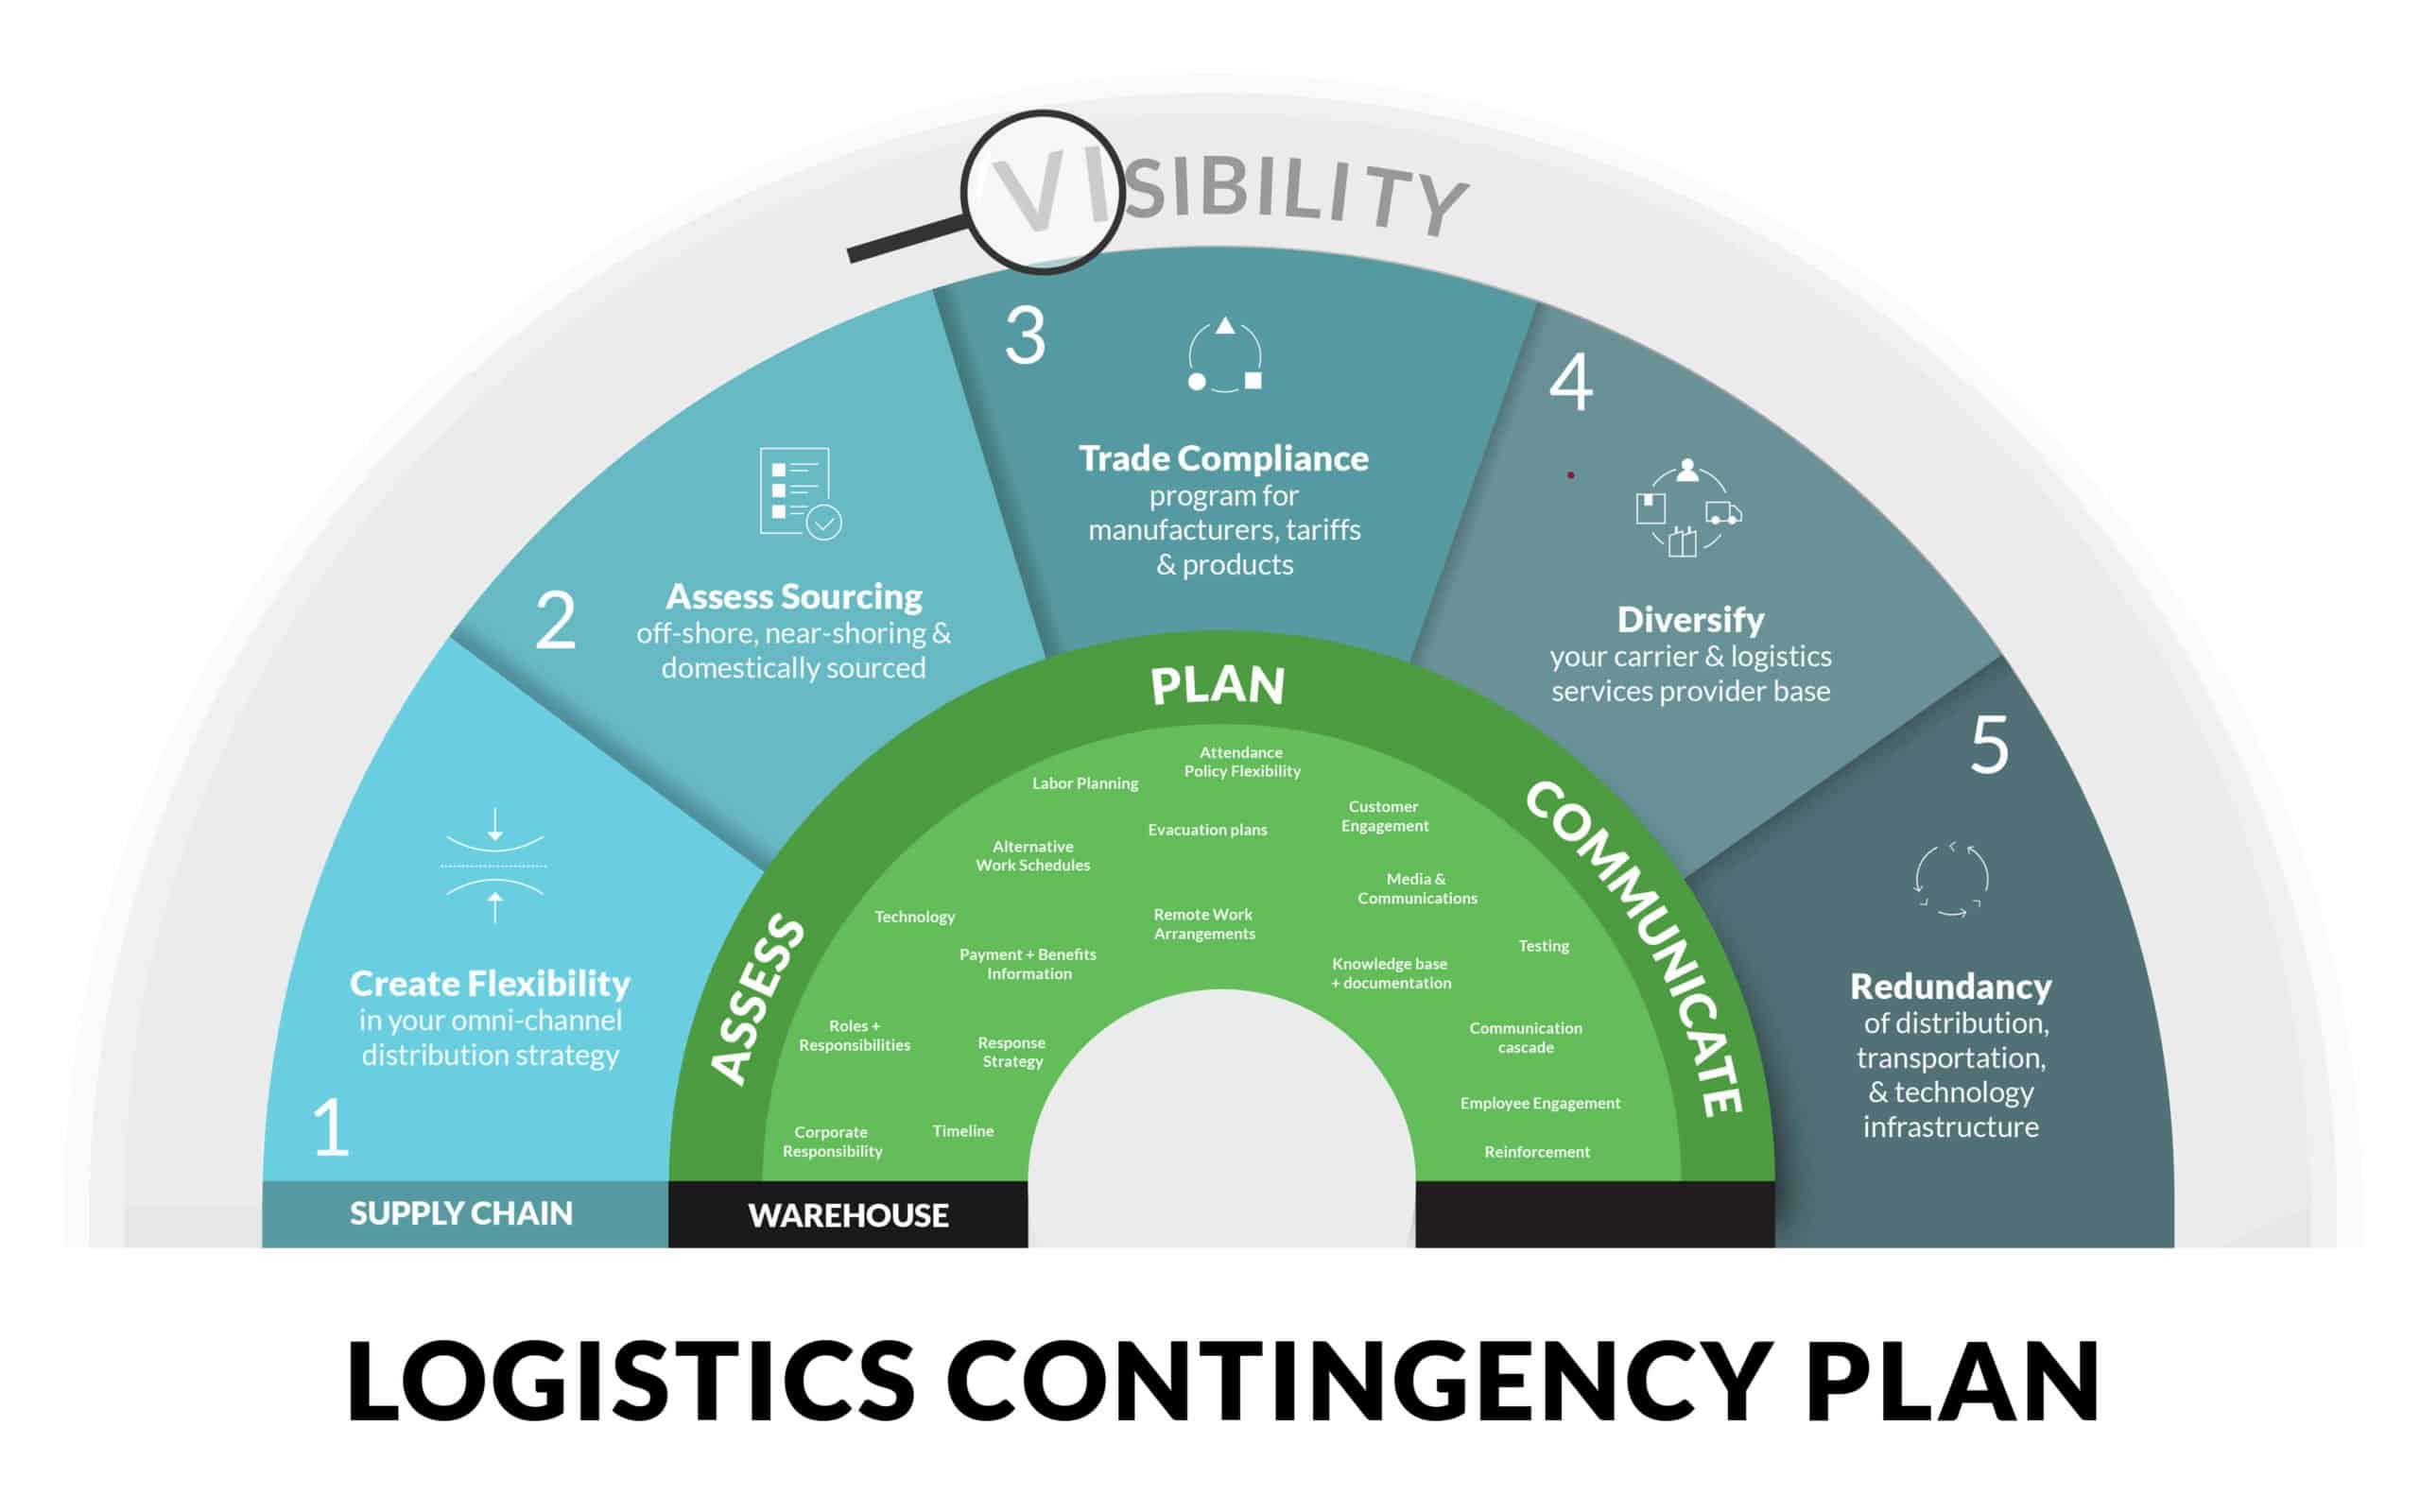 Key Components of a Logistics Contingency Plan